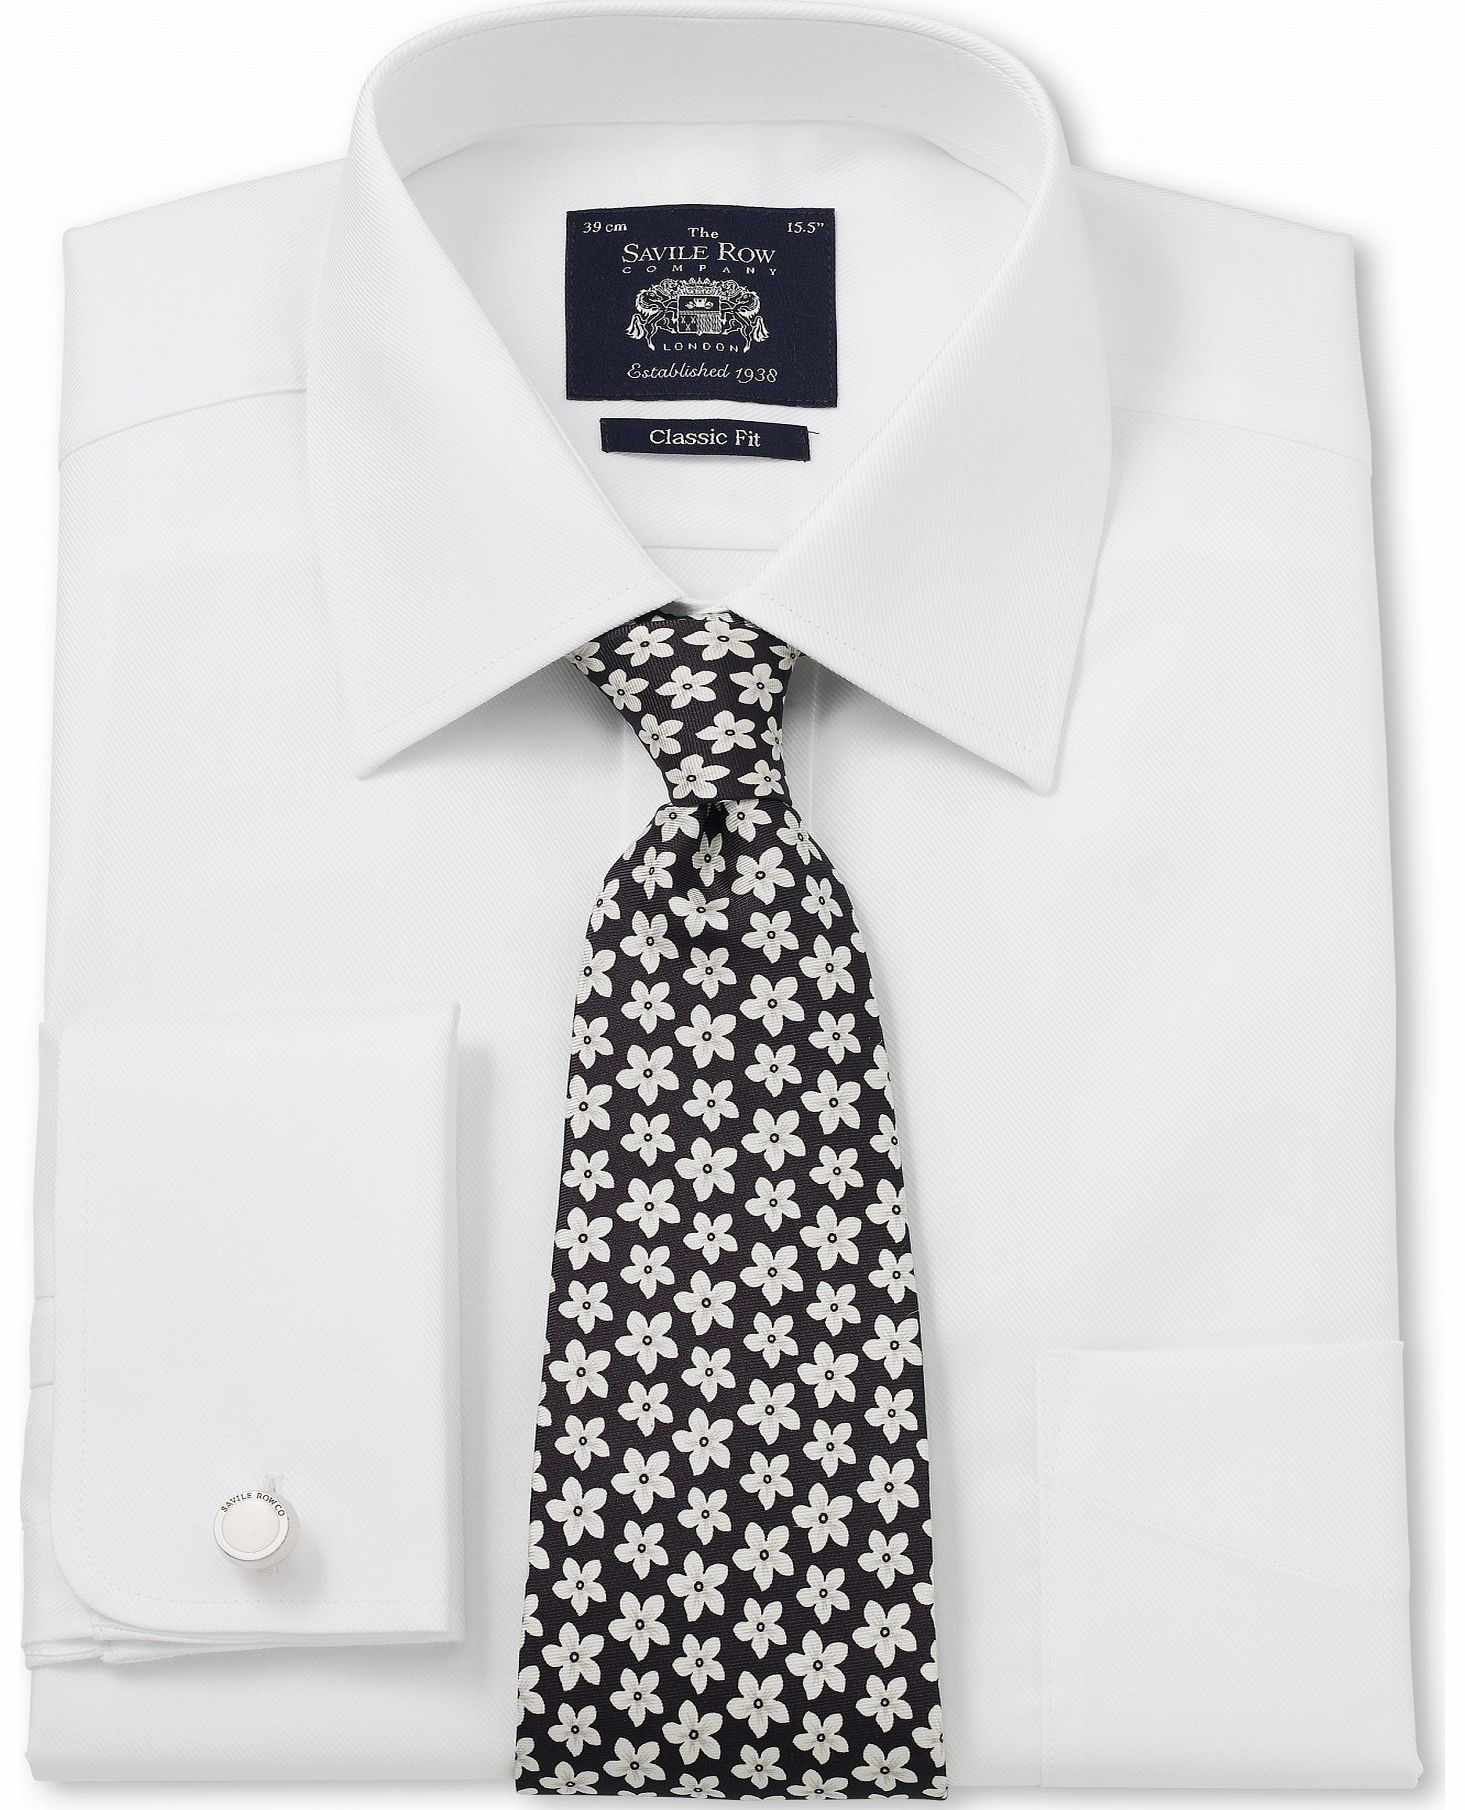 Savile Row Company White Twill Windsor Collar Classic Fit Shirt 18